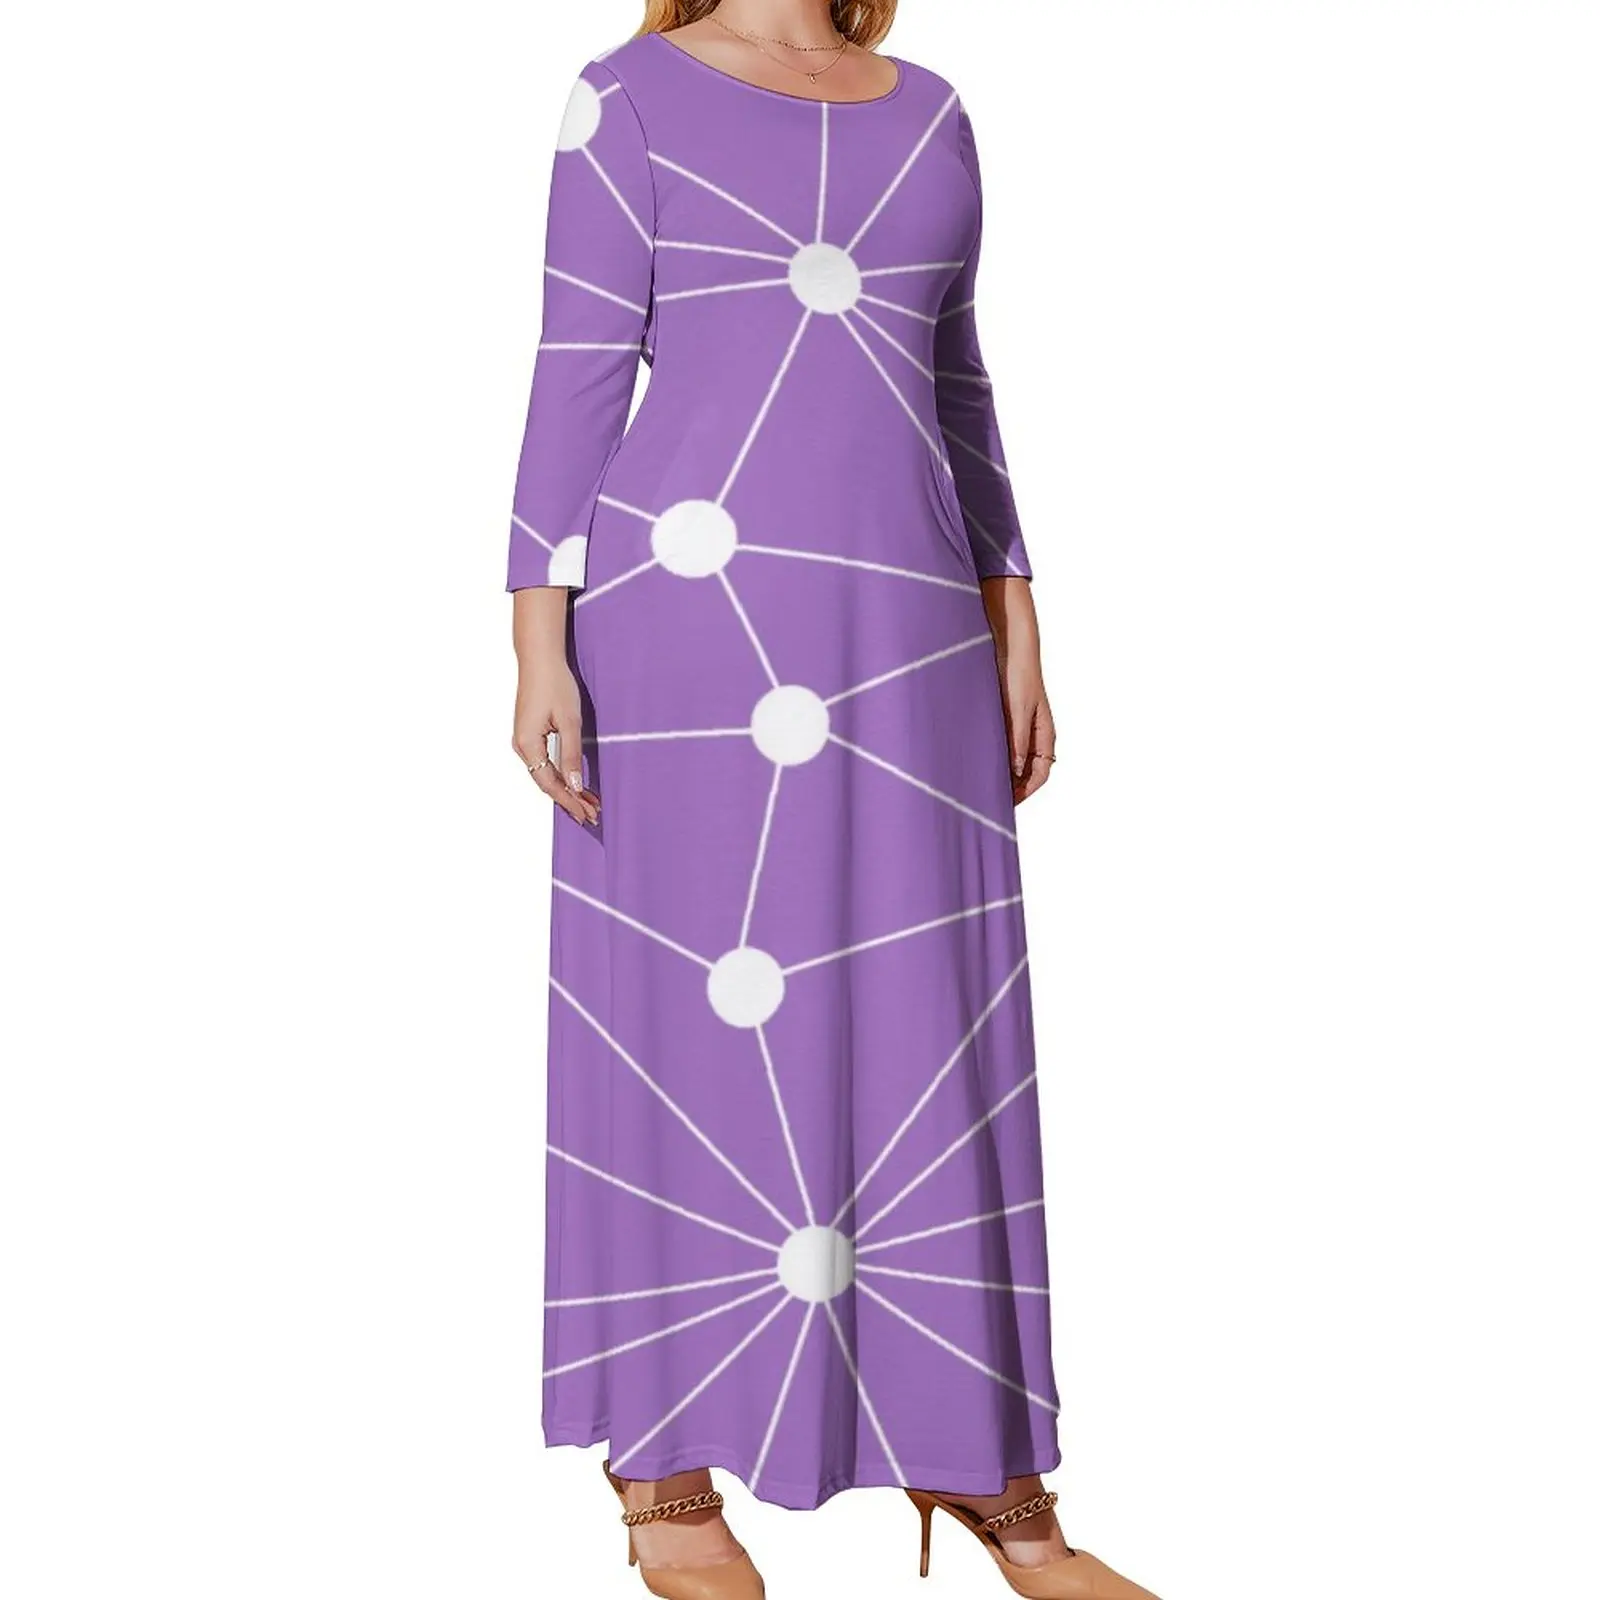 Abstract Geometry Dress Long Sleeve Polka Dots Print Party Maxi Dress Autumn Street Style Graphic Long Dresses Plus Size 3XL 4XL